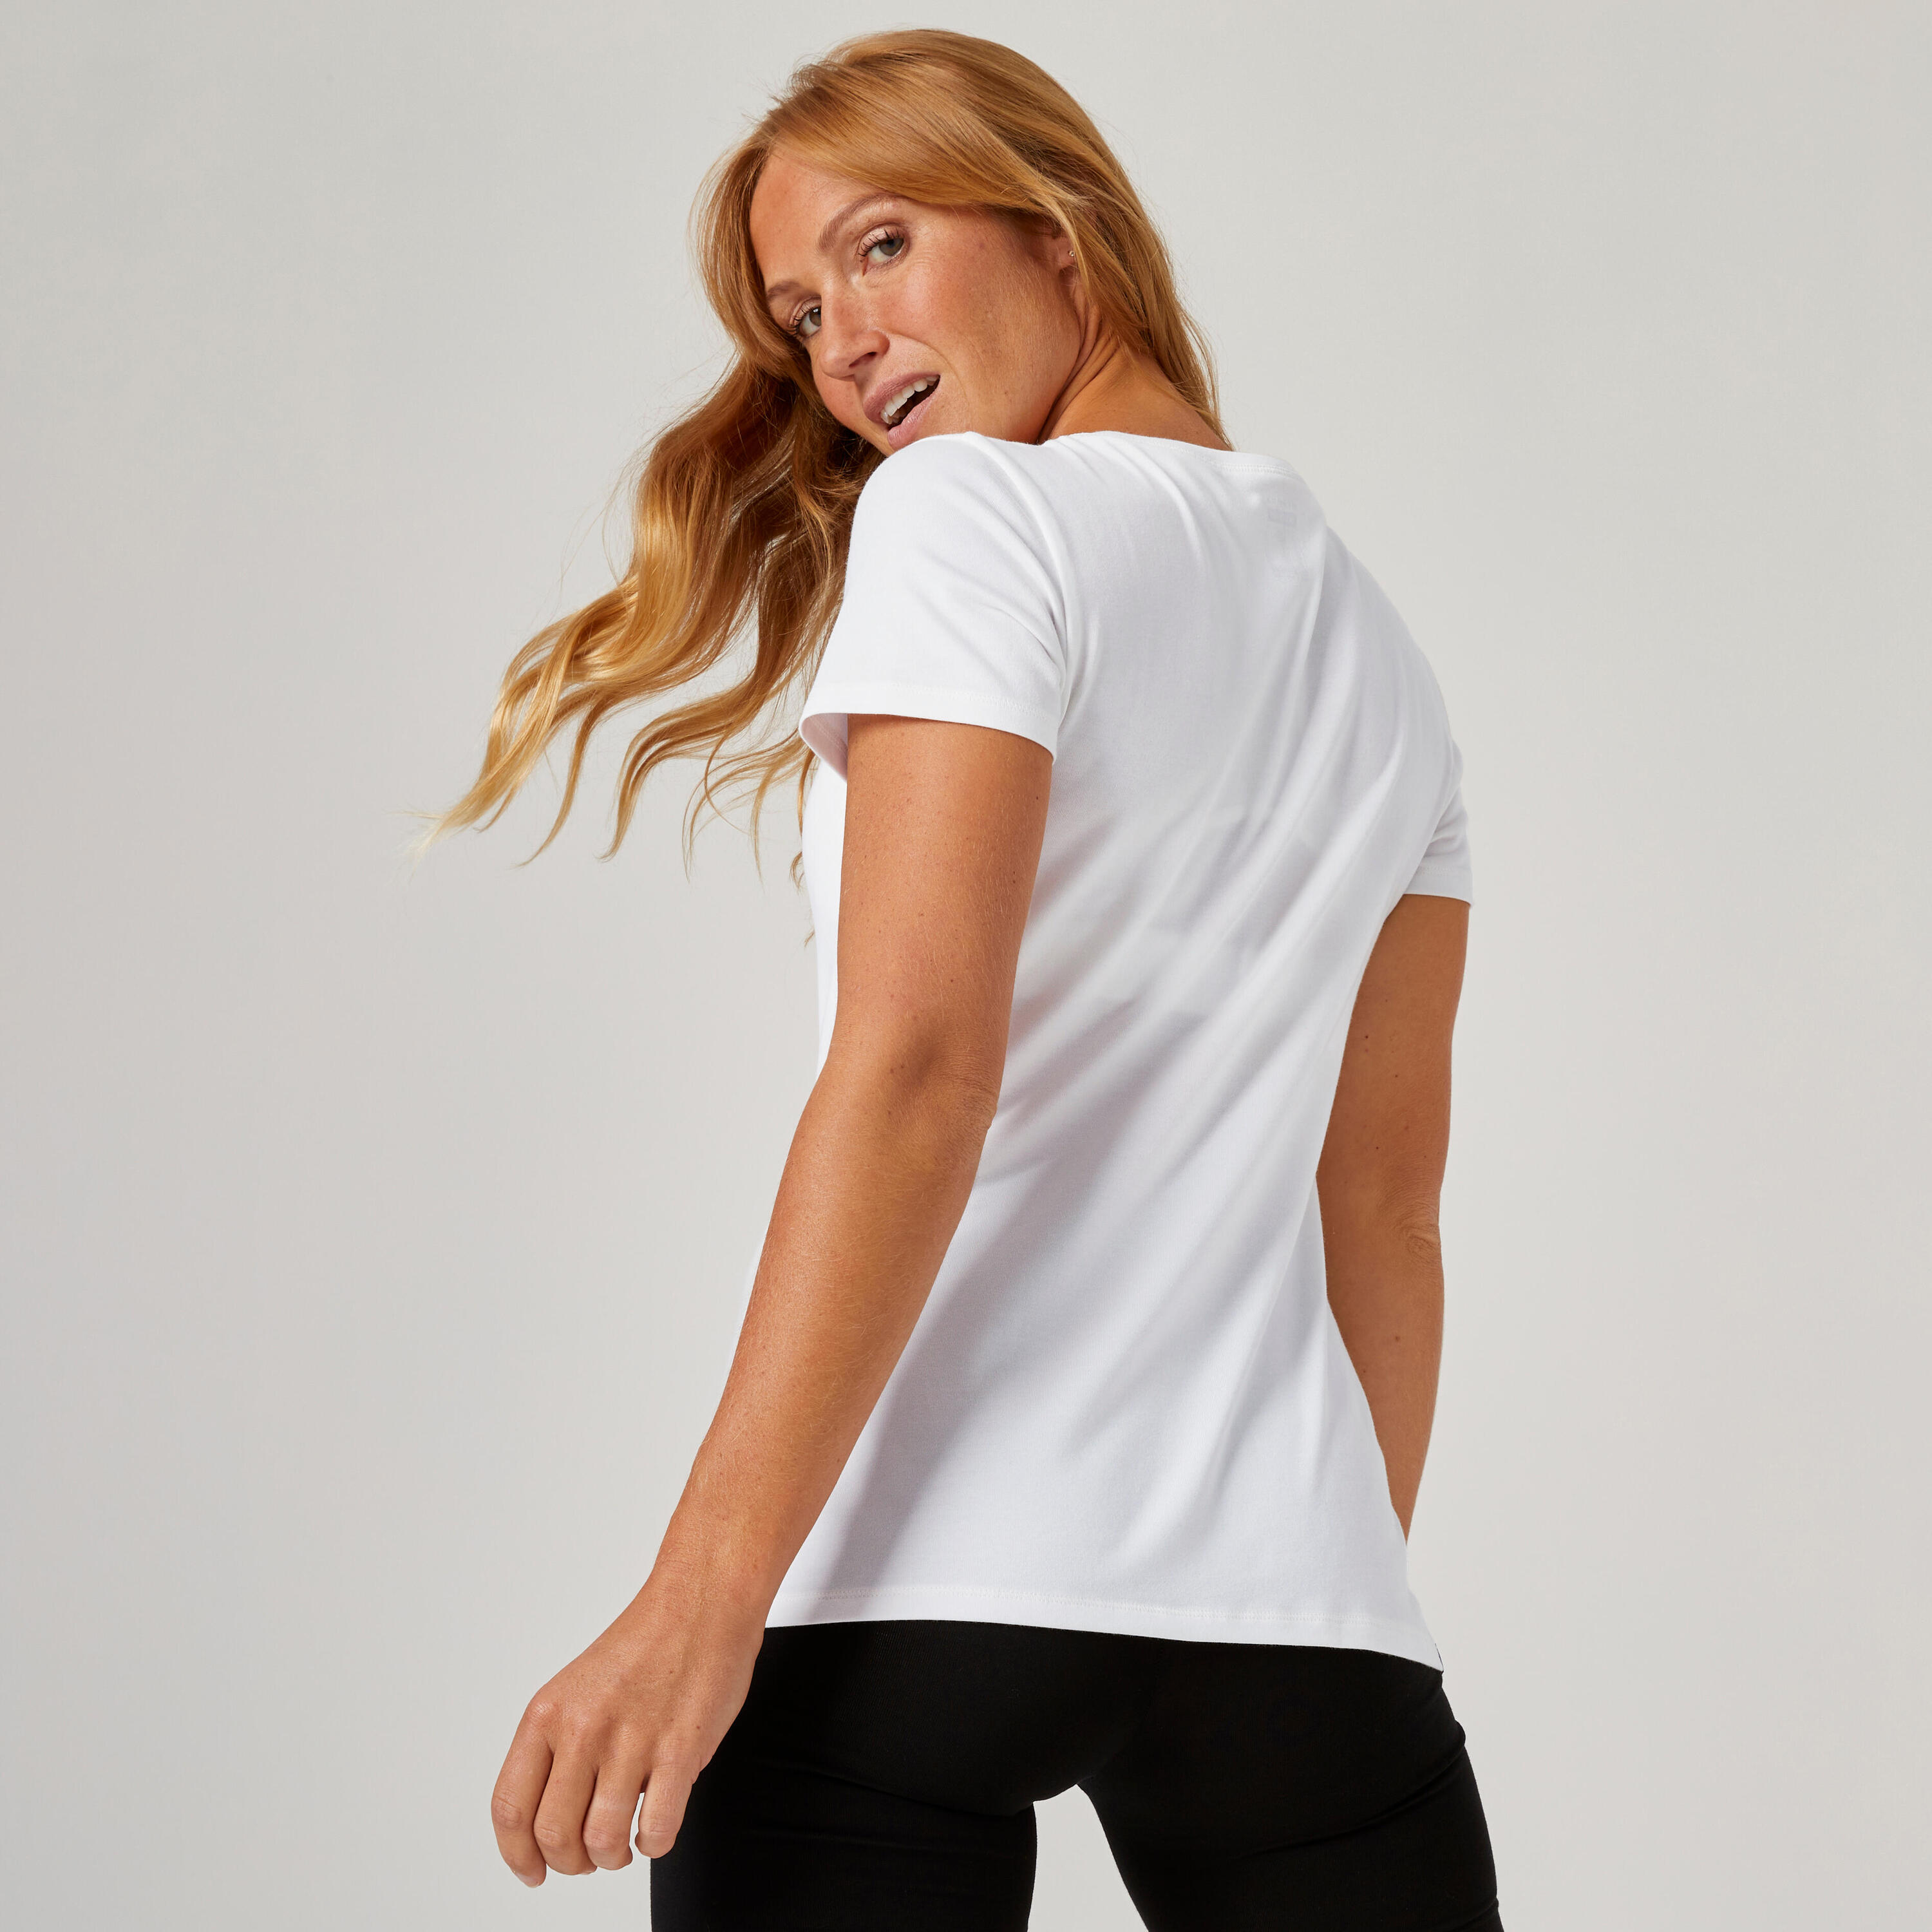 Women's Short-Sleeved Crew Neck Cotton Fitness T-Shirt 500 - Glacier White 2/4